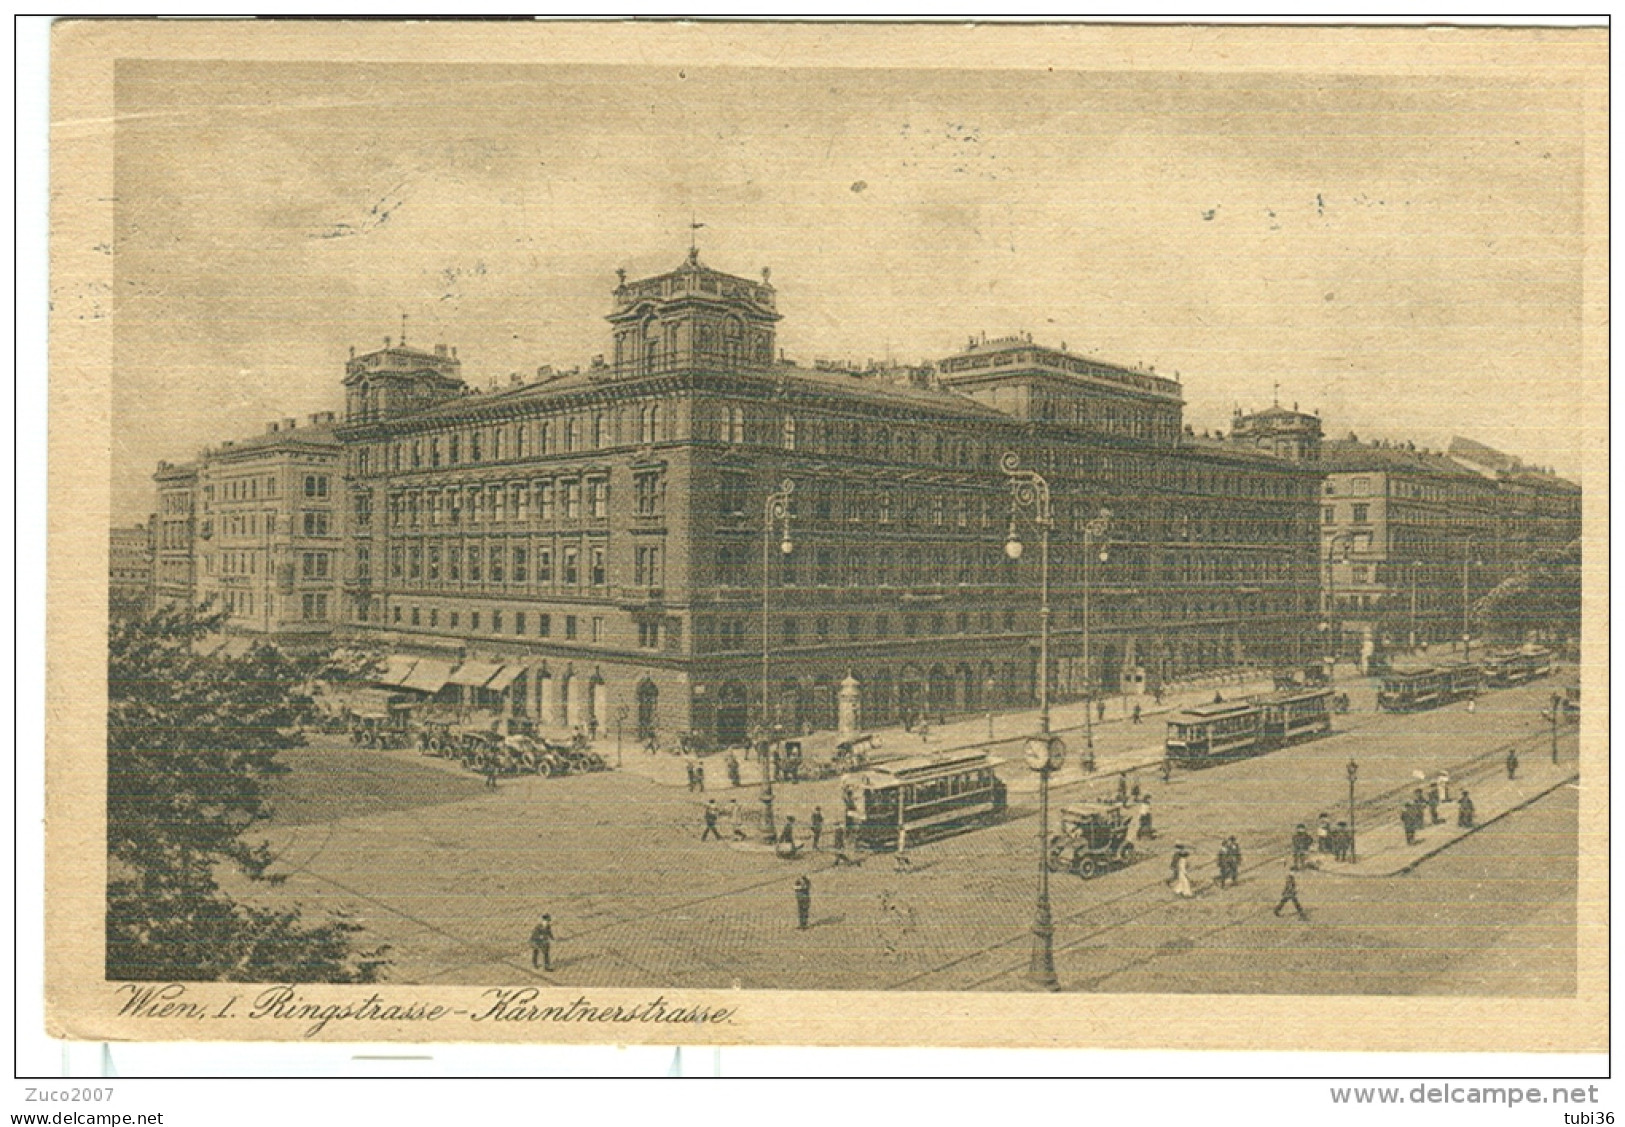 Wien - Ringstrasse , Kärntnerstrasse ,ILLUSTRATED Postkarte Weiße SCHWARZ ZUR TRIESTE 1922 SMALL SIZE 9 X 14, - Ringstrasse